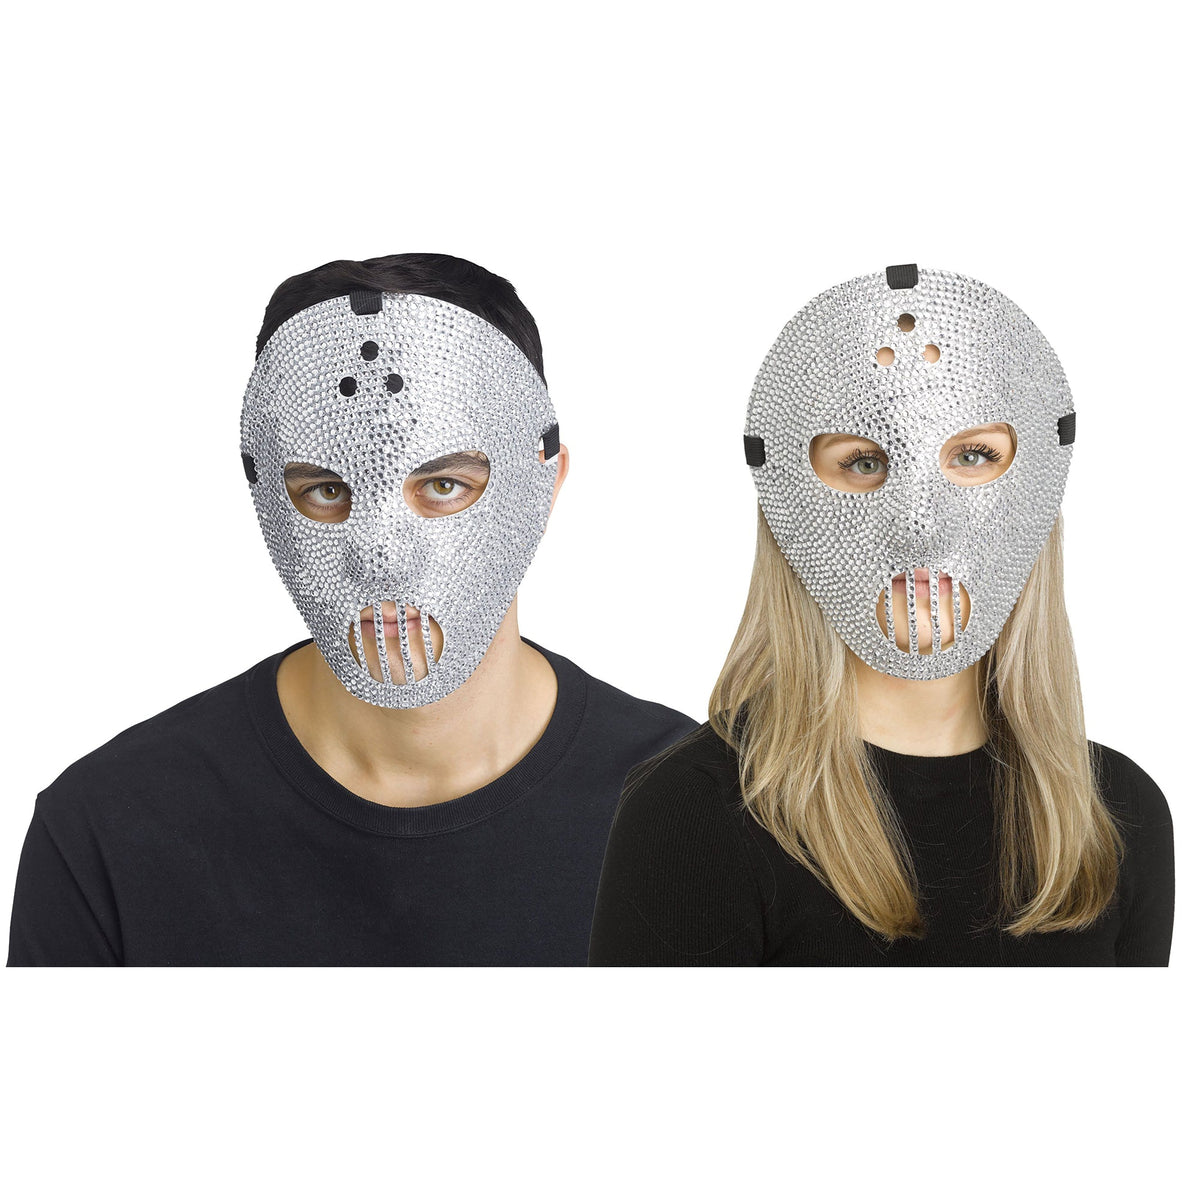 FUN WORLD Costume Accessories Rhinestone Hockey Mask for Adults